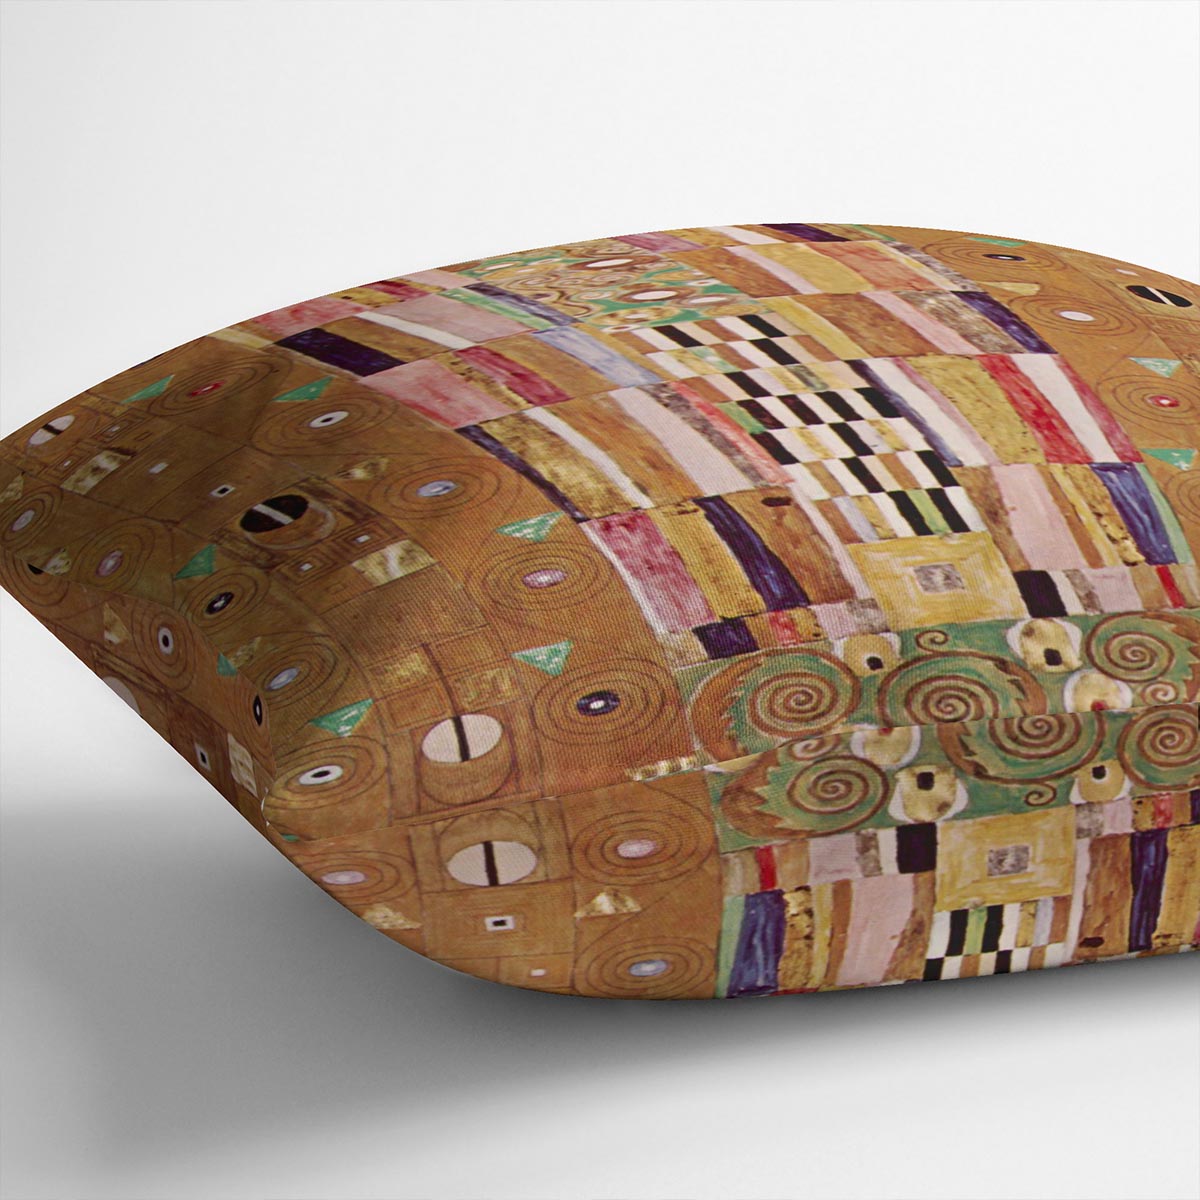 Frieze by Klimt Cushion